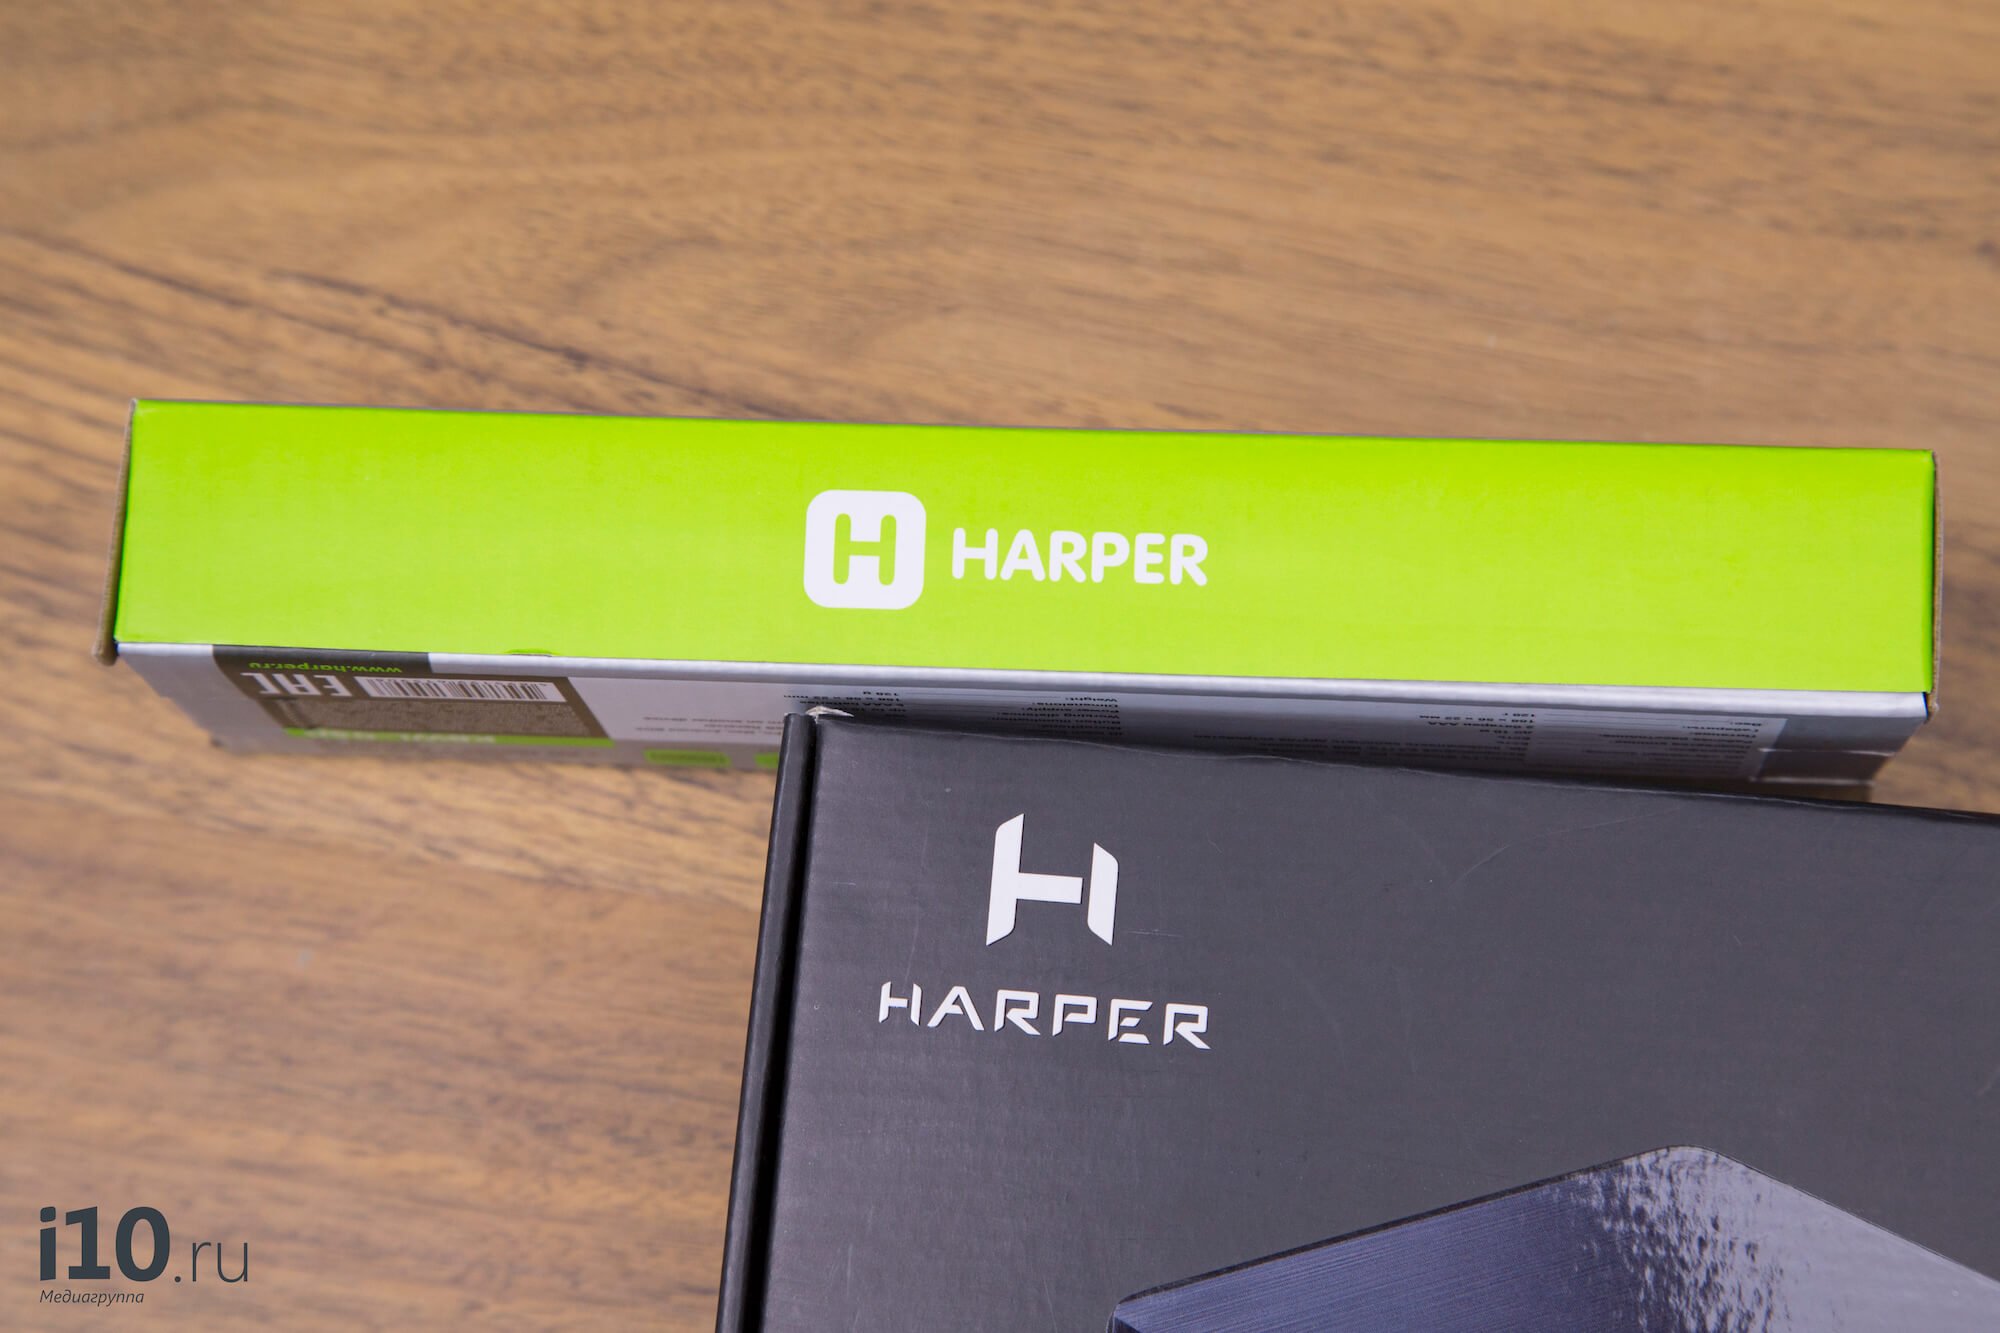 Обзор Harper ABX-332. Сверху привычный логотип, снизу логотип с коробки Harper ABX-332. Фото.